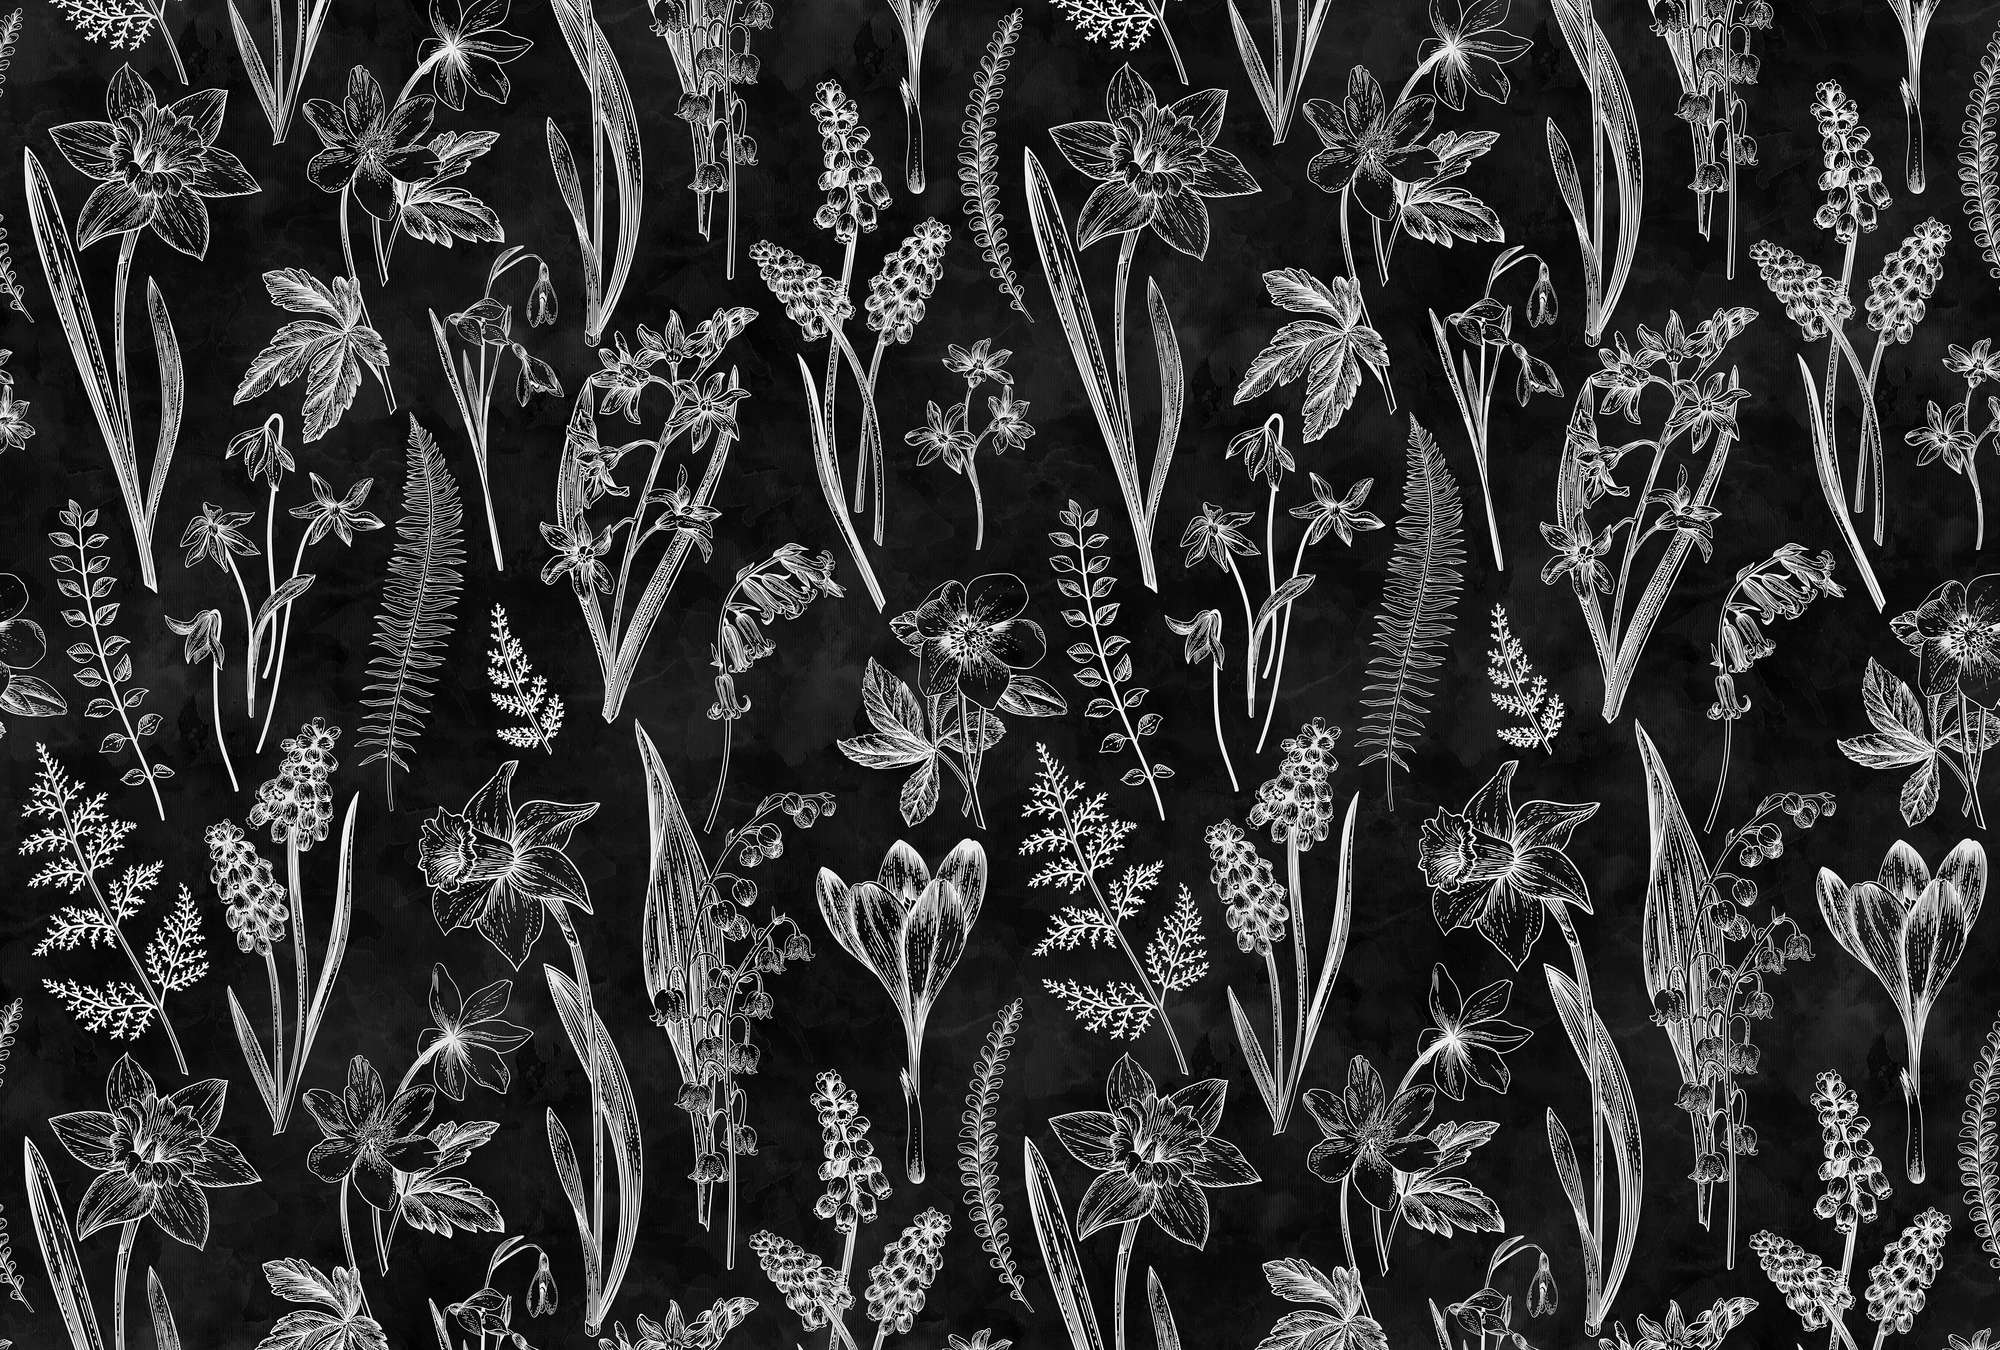             Photo wallpaper black and white botanical design
        